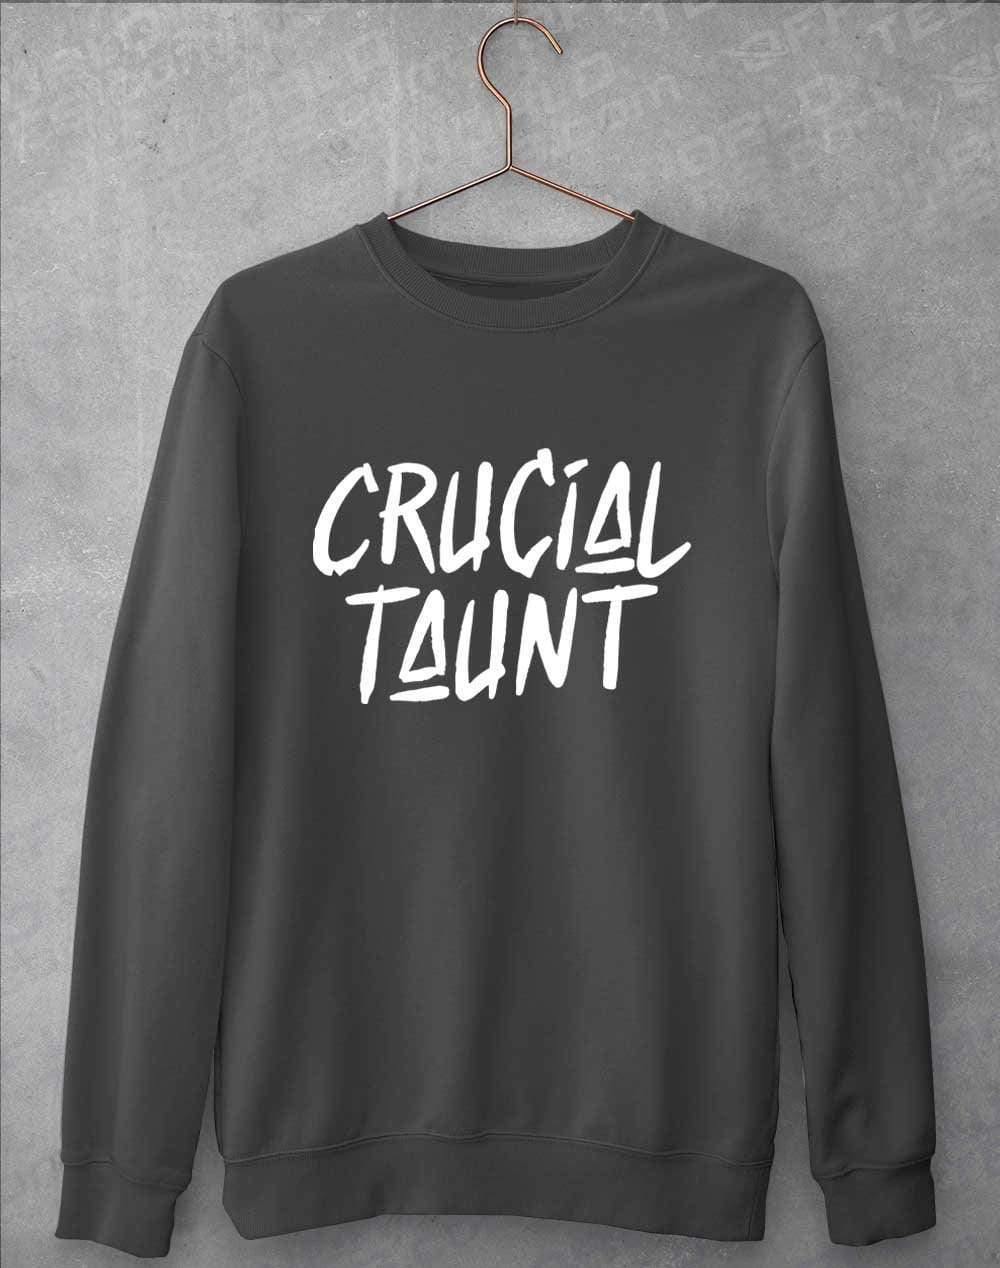 Crucial Taunt Sweatshirt S / Charcoal  - Off World Tees